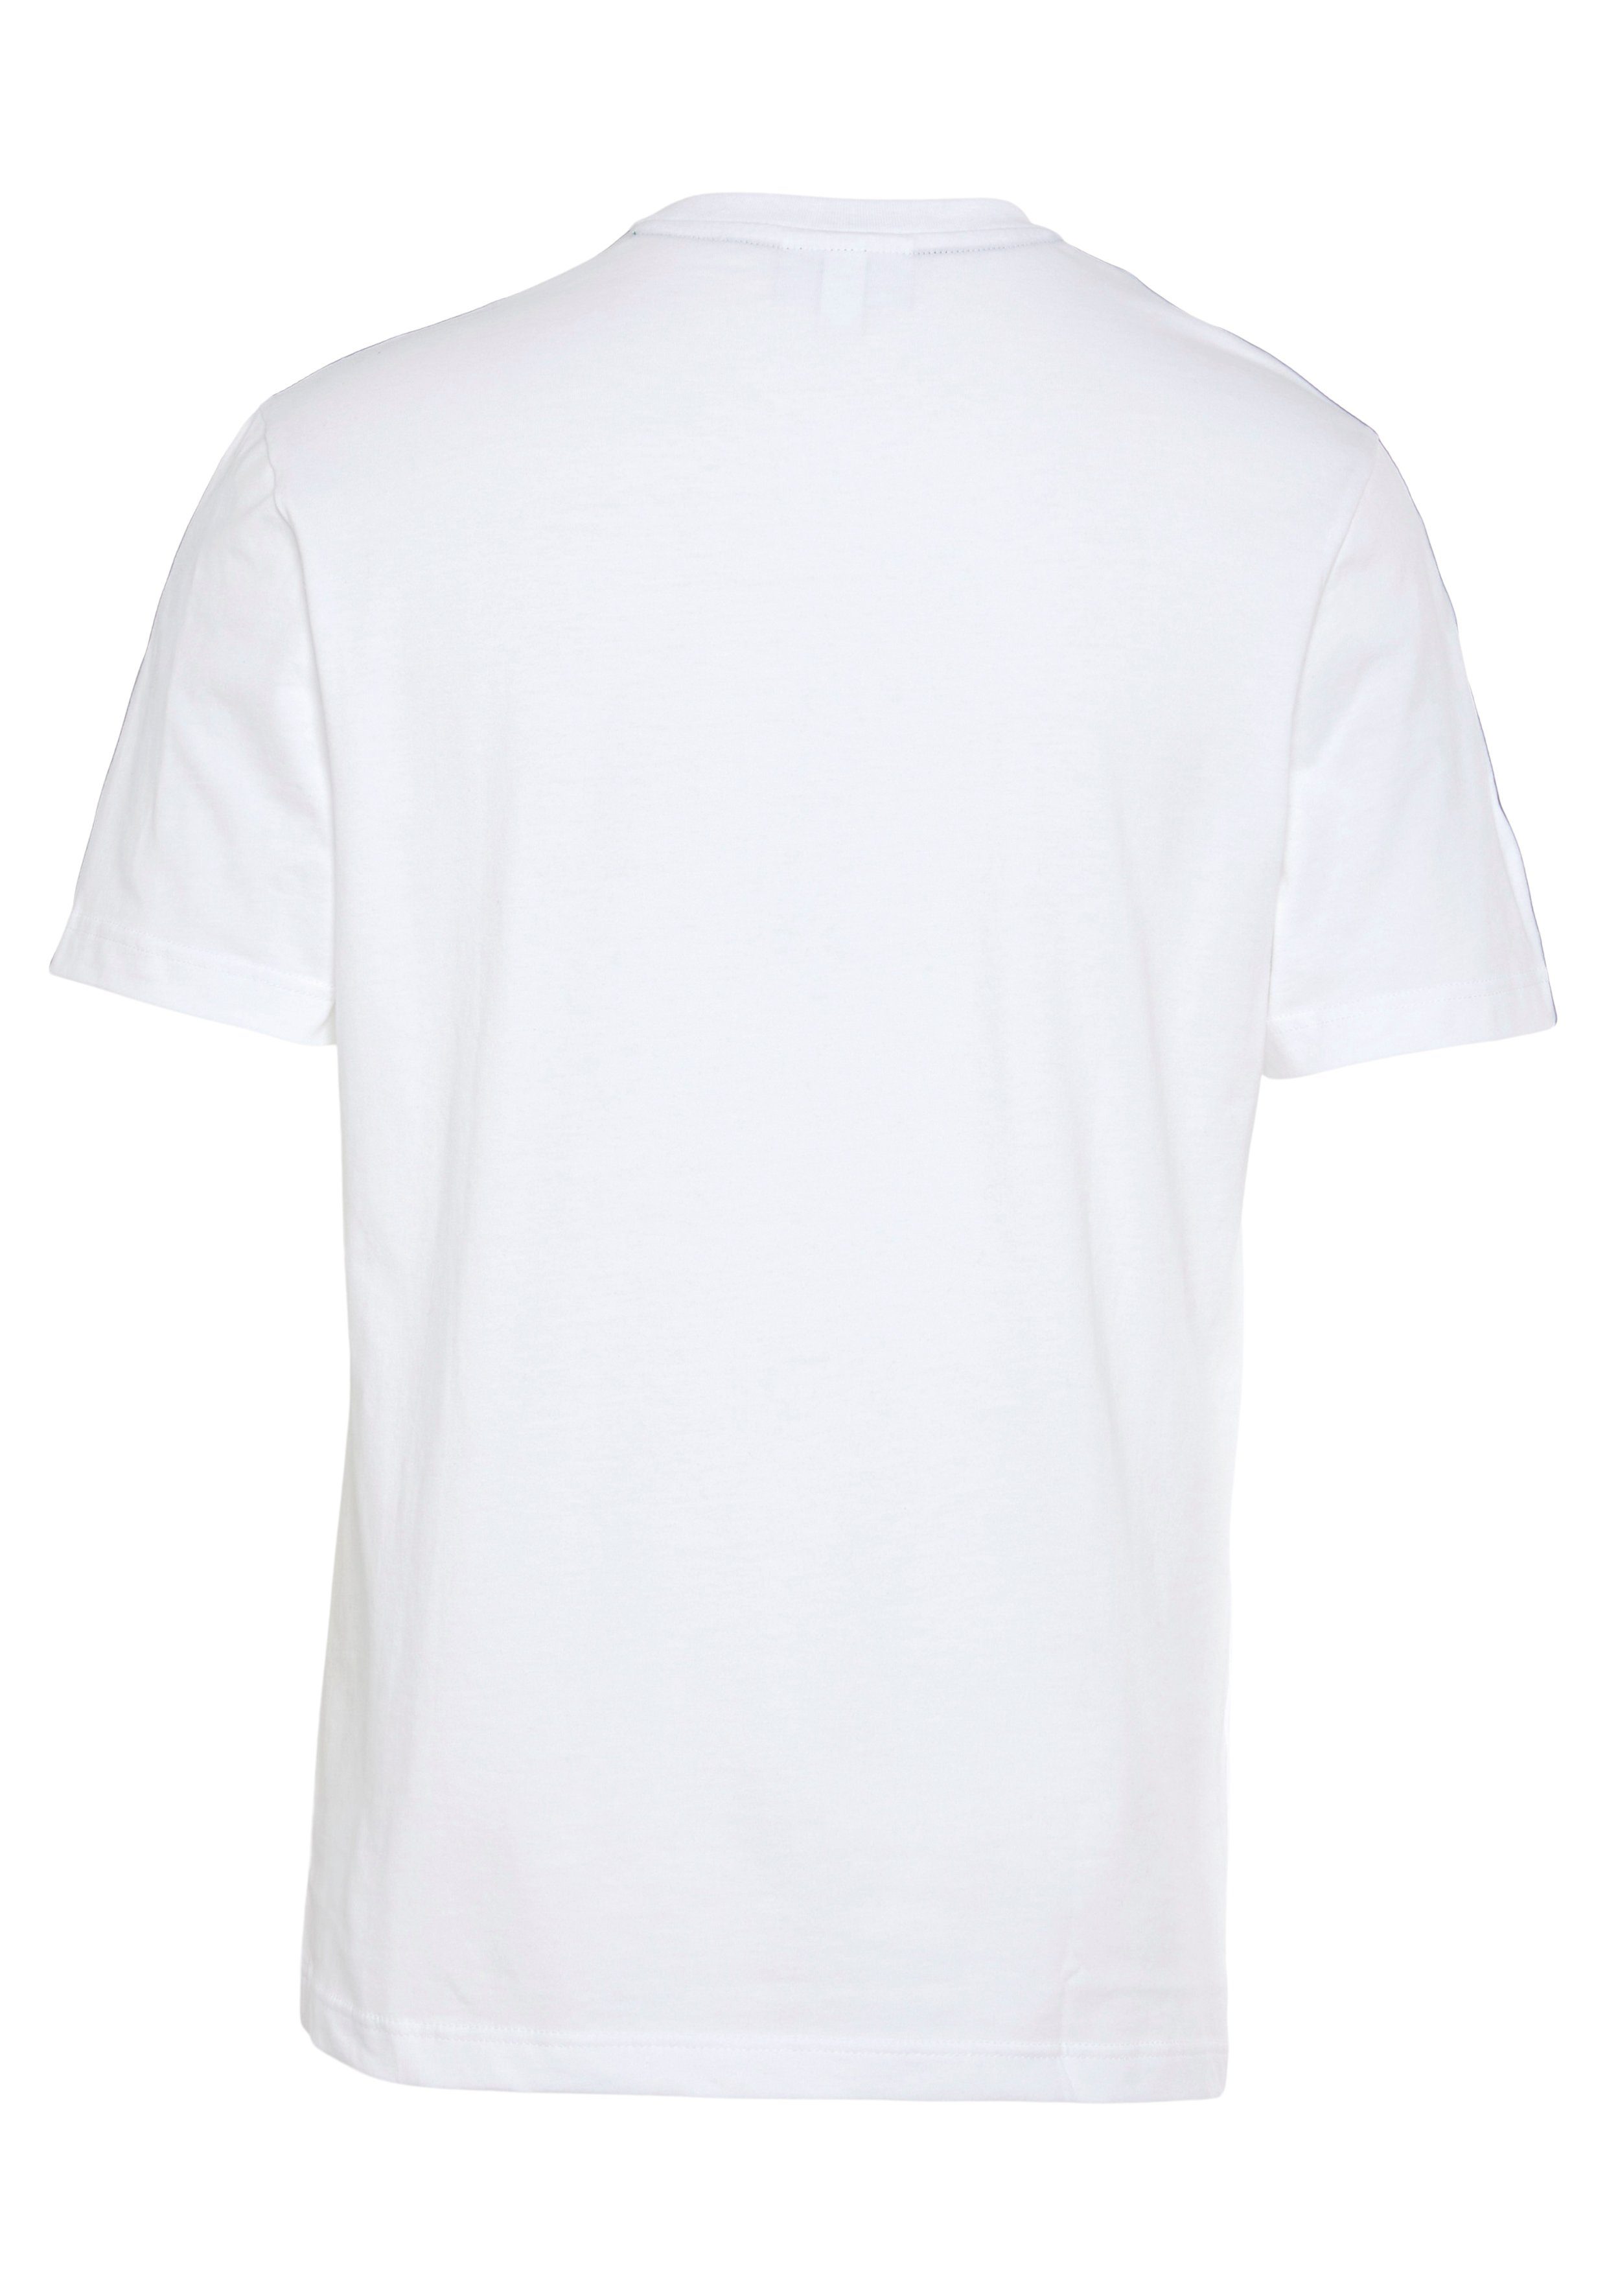 beschriftetem mit Kontrastband T-Shirt den white an Schultern Lacoste